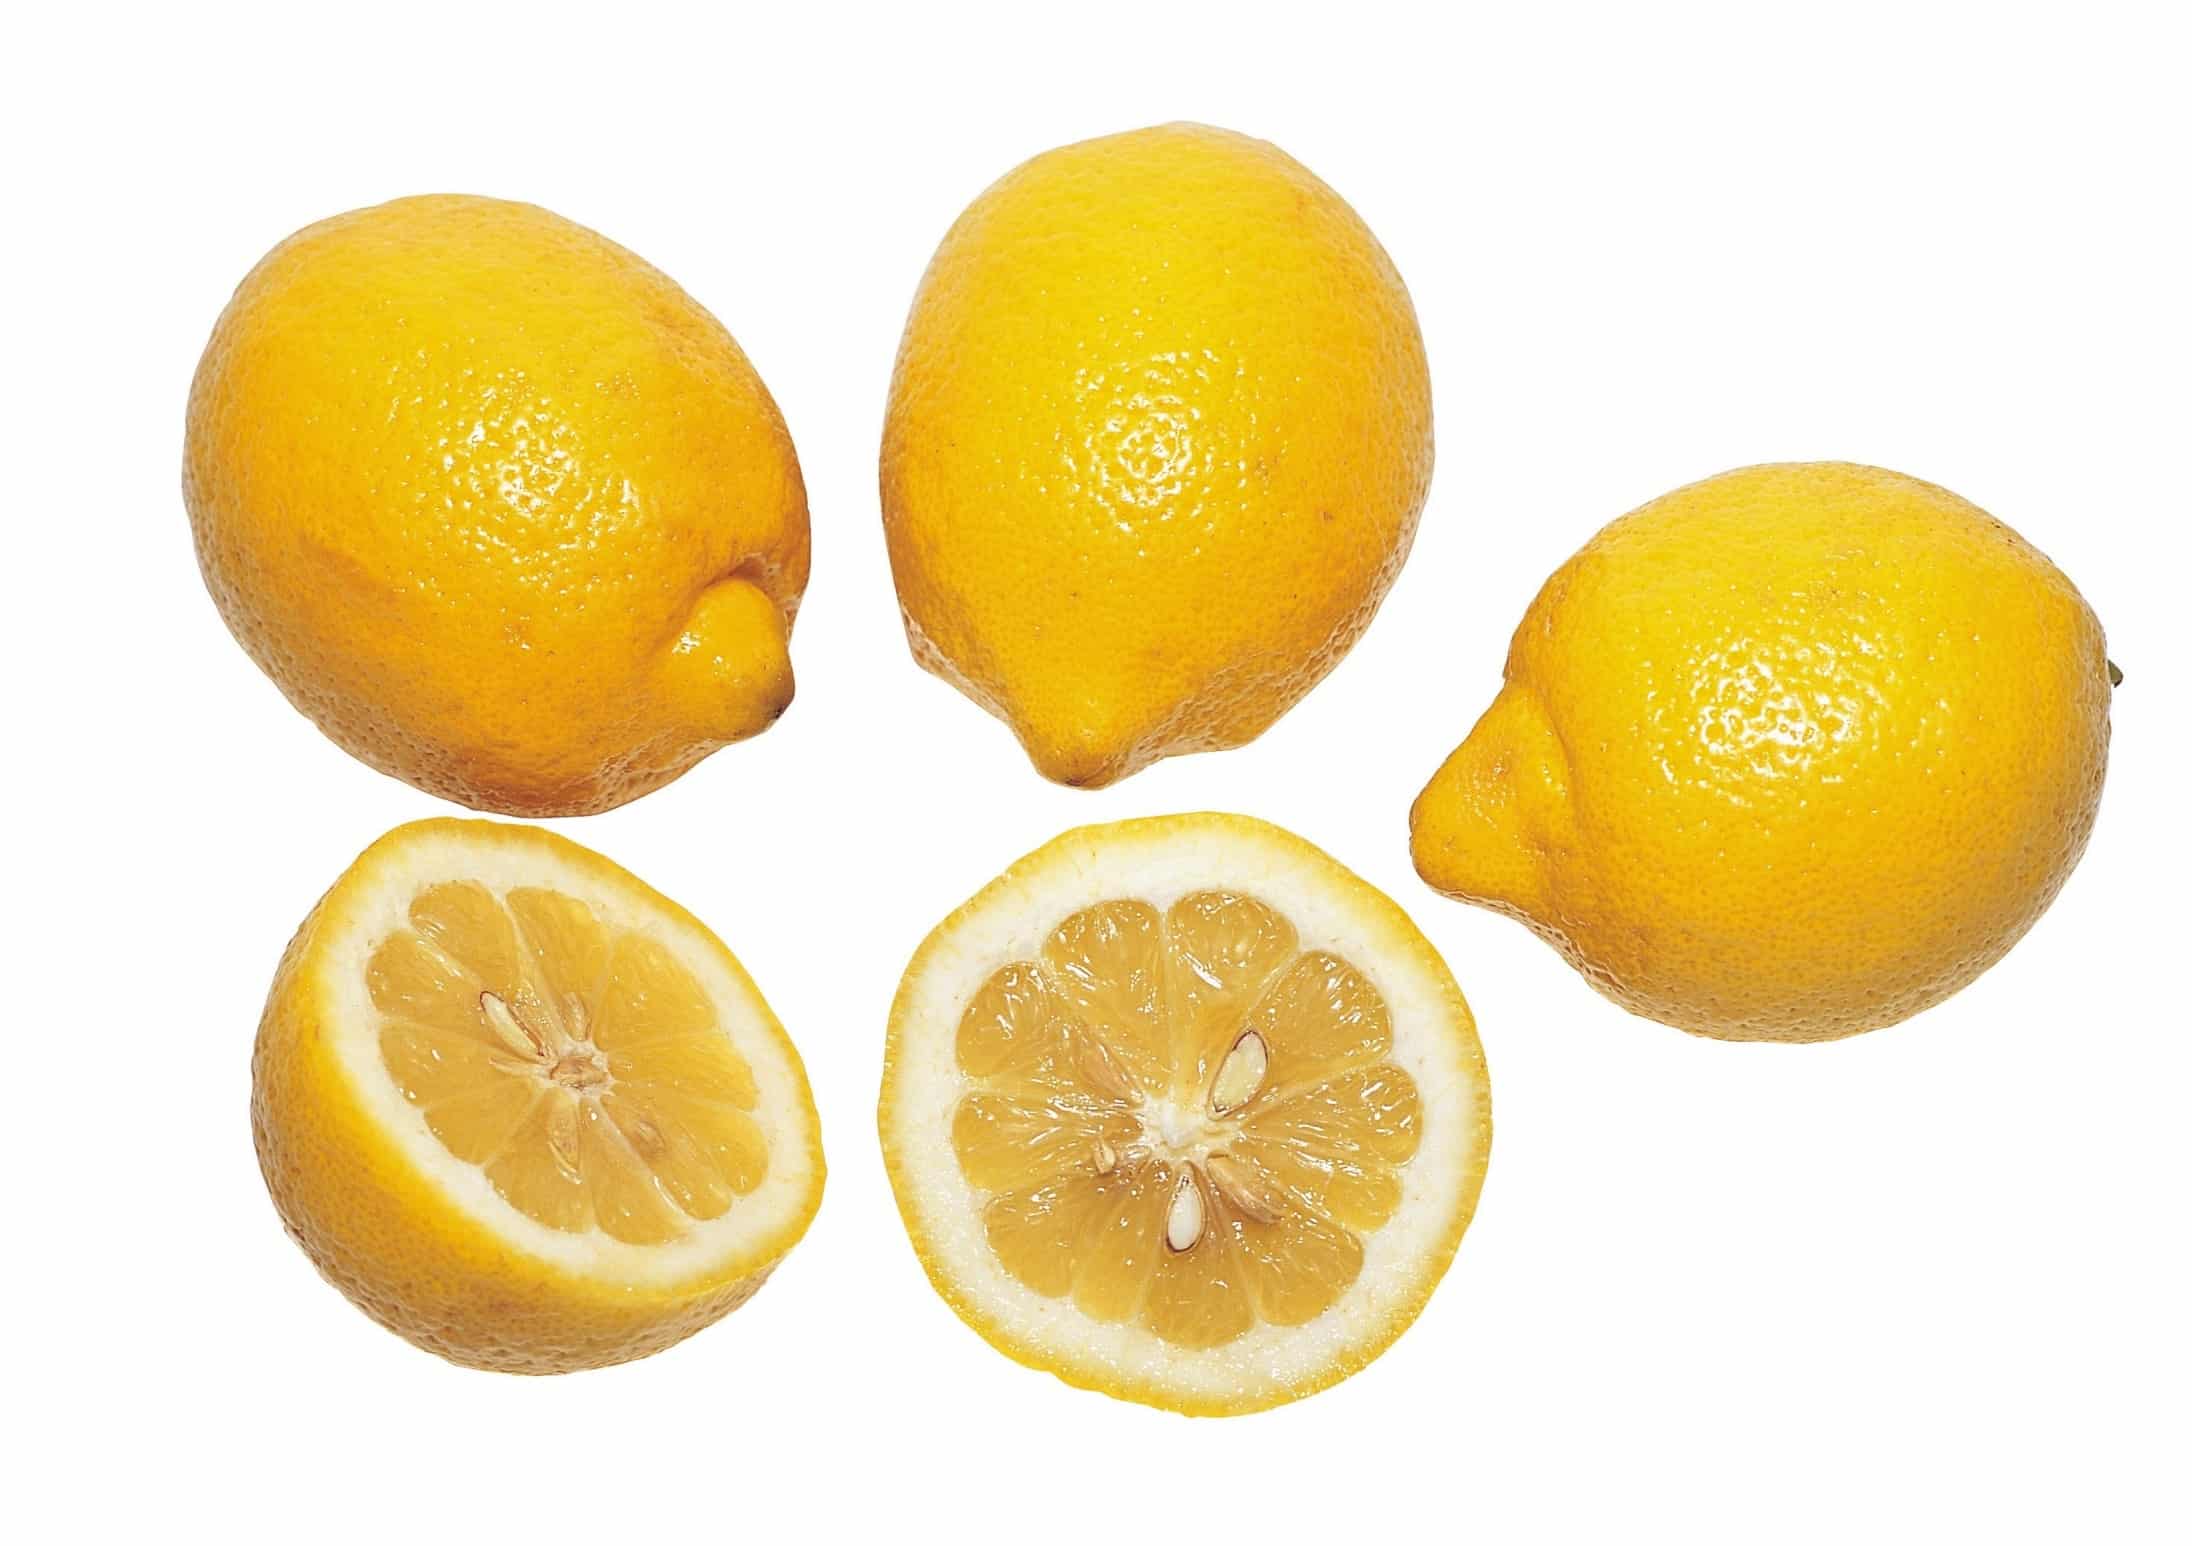 Lemons - Lemon Tree Genetics